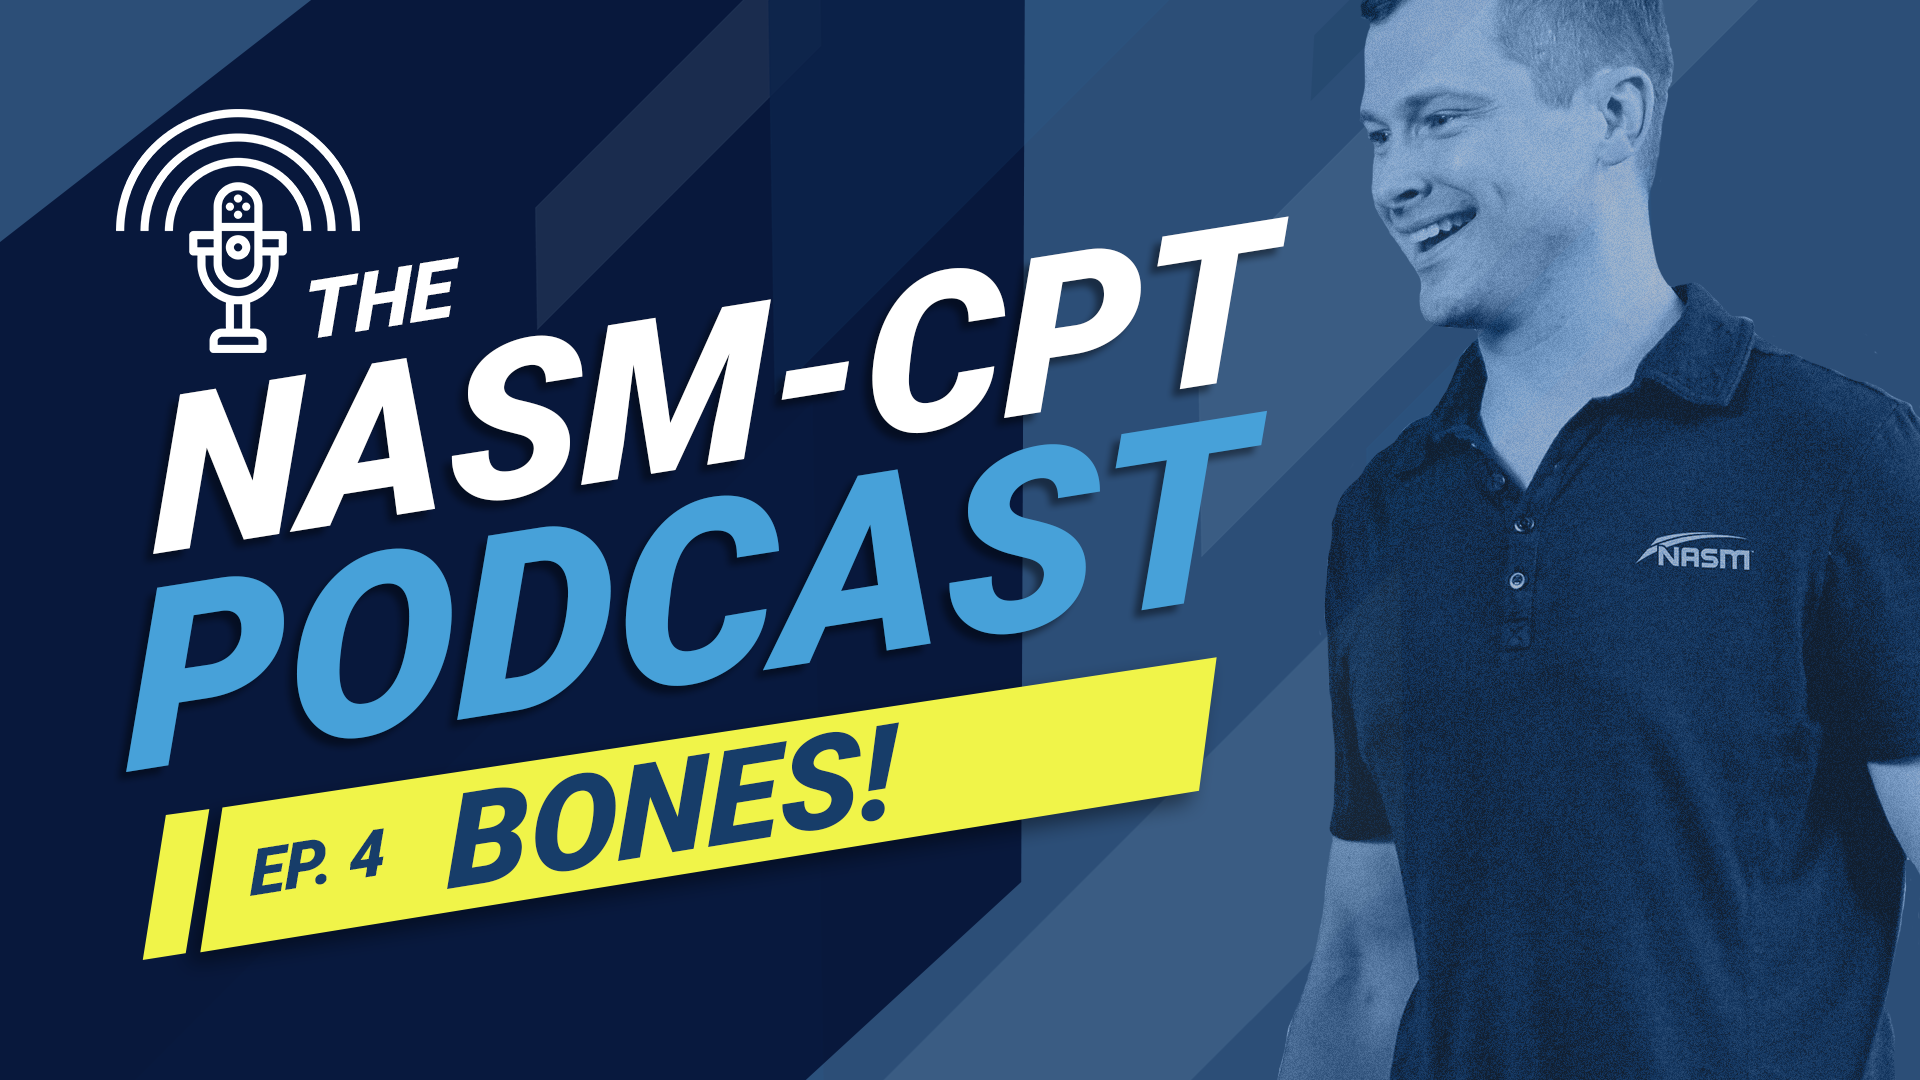 The NASM-CPT Podcast Ep. 4 Bones!